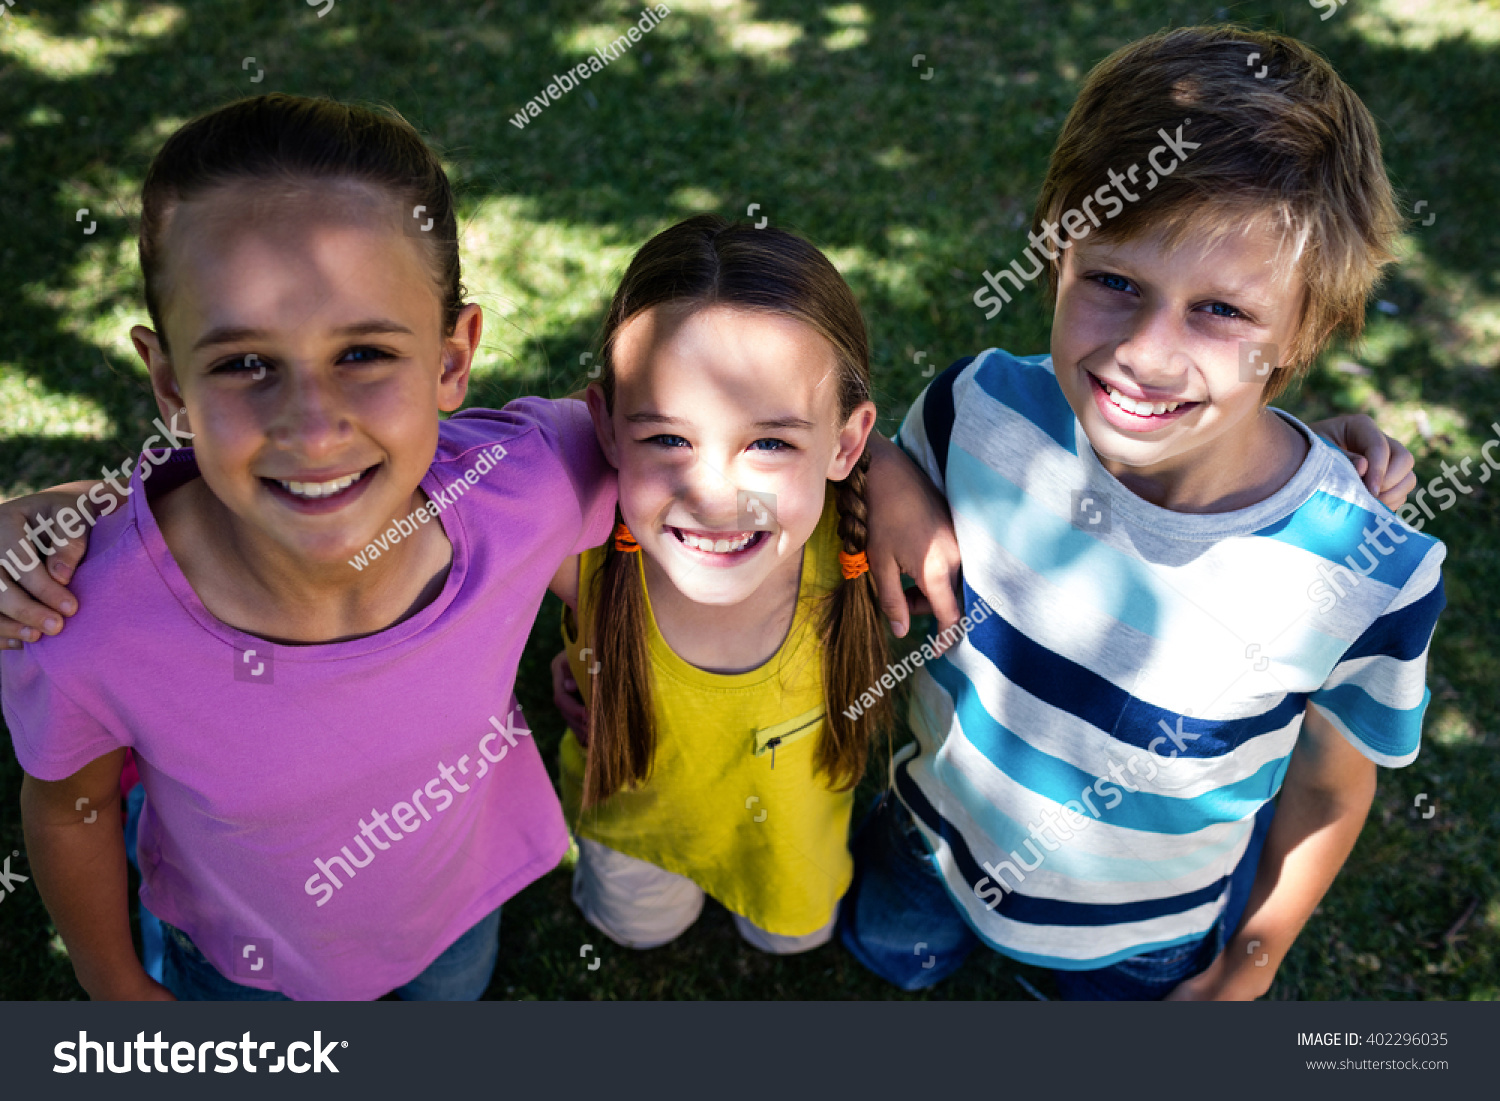 Stock Photo Portrait Of Happy Children Standing With Arm Around In Park 402296035 